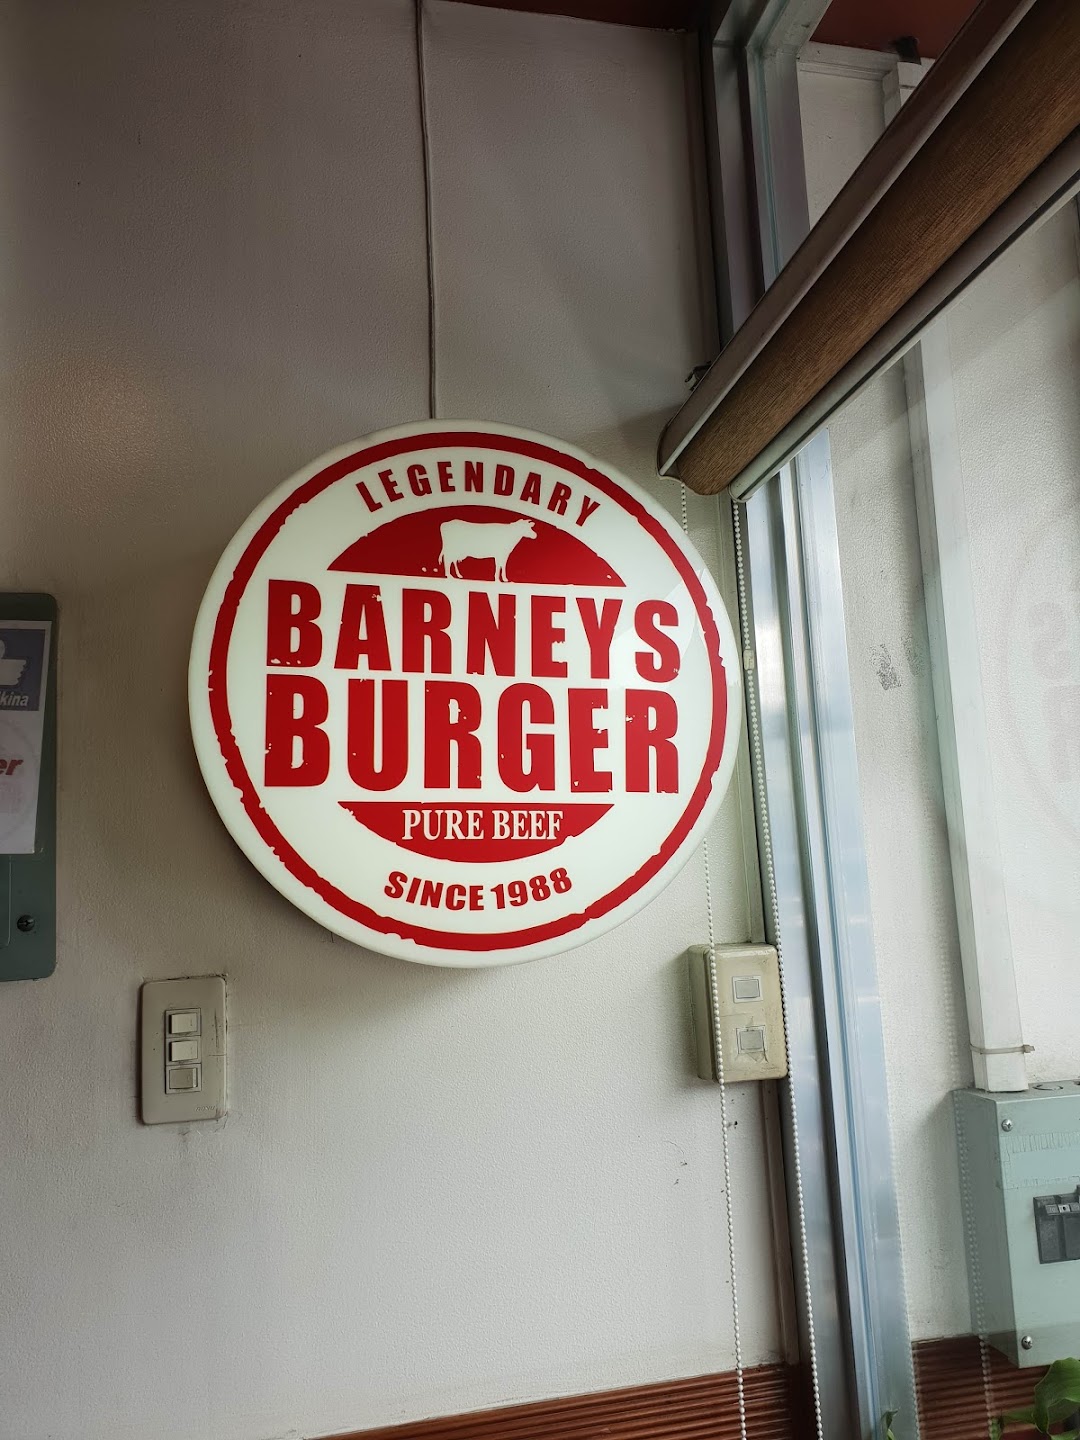 Legendary Barneys Burger